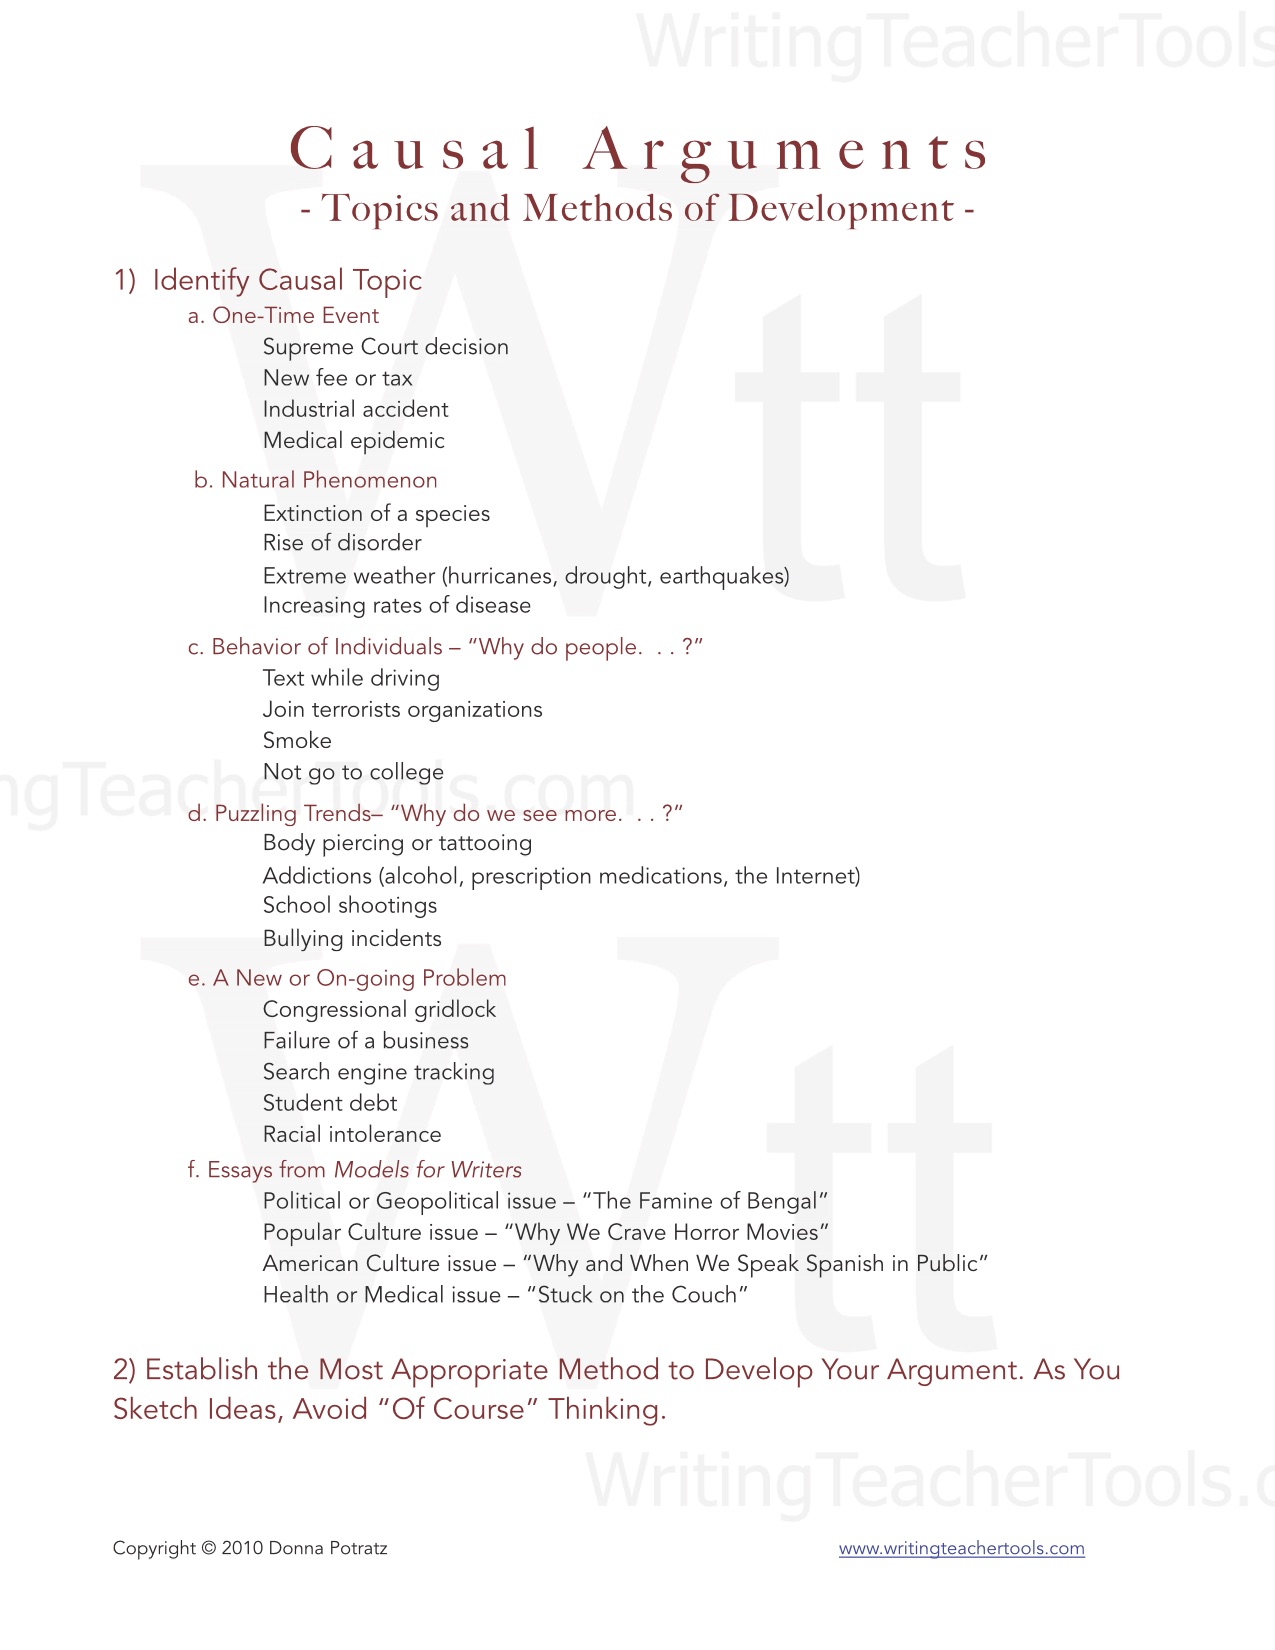 causal argument topics and methods of development